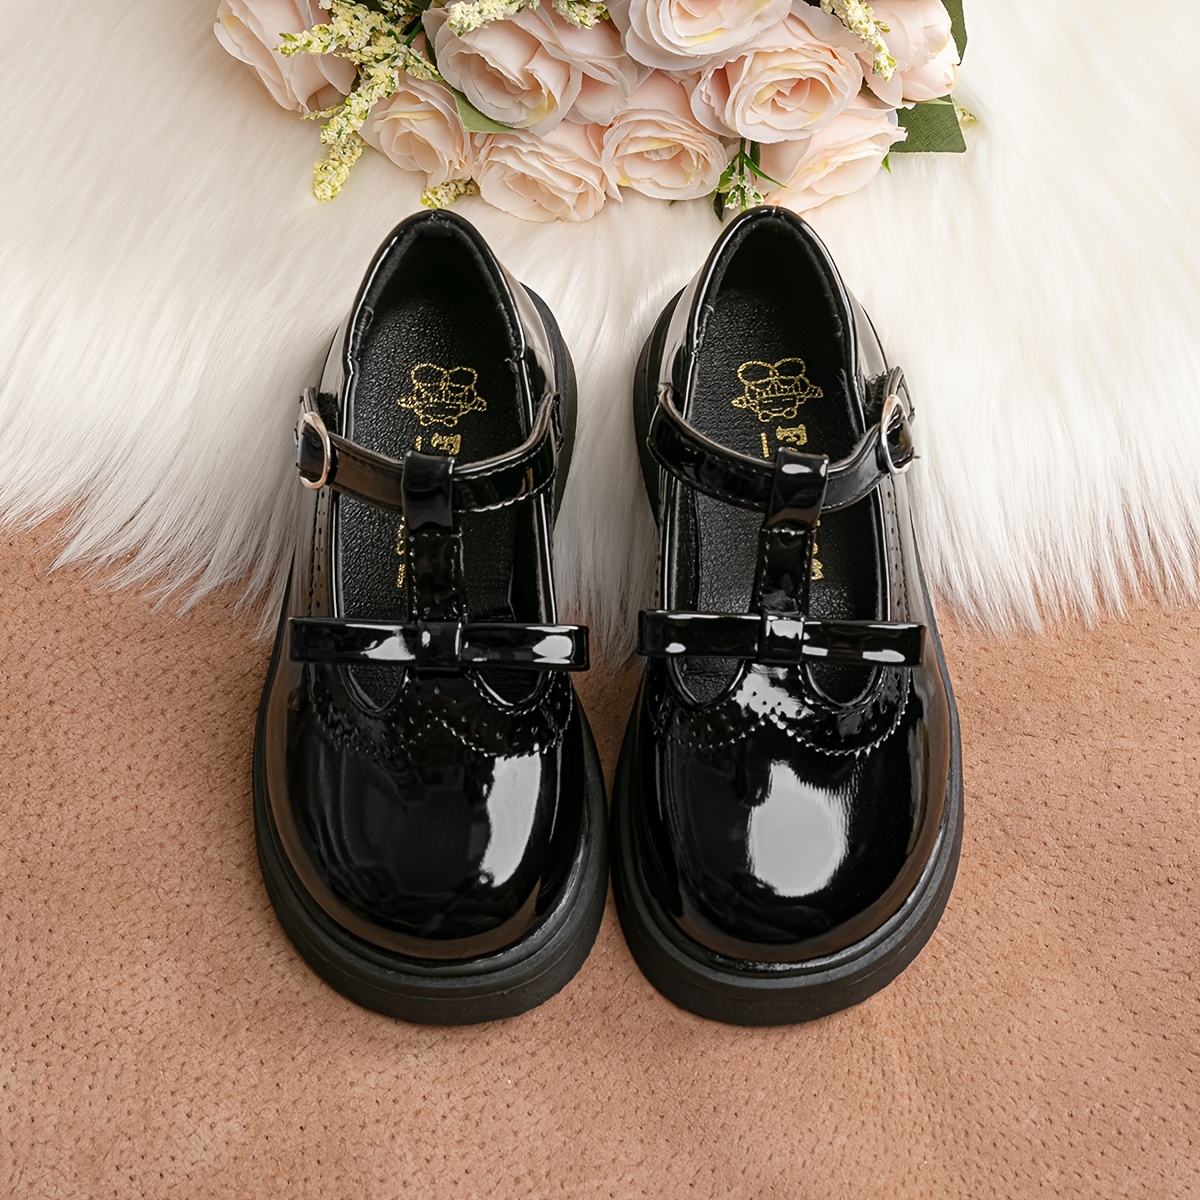 Girls Cute * Shoes, Flat Slip-on Non-Slip Shoes For Uniform Wedding Autumn